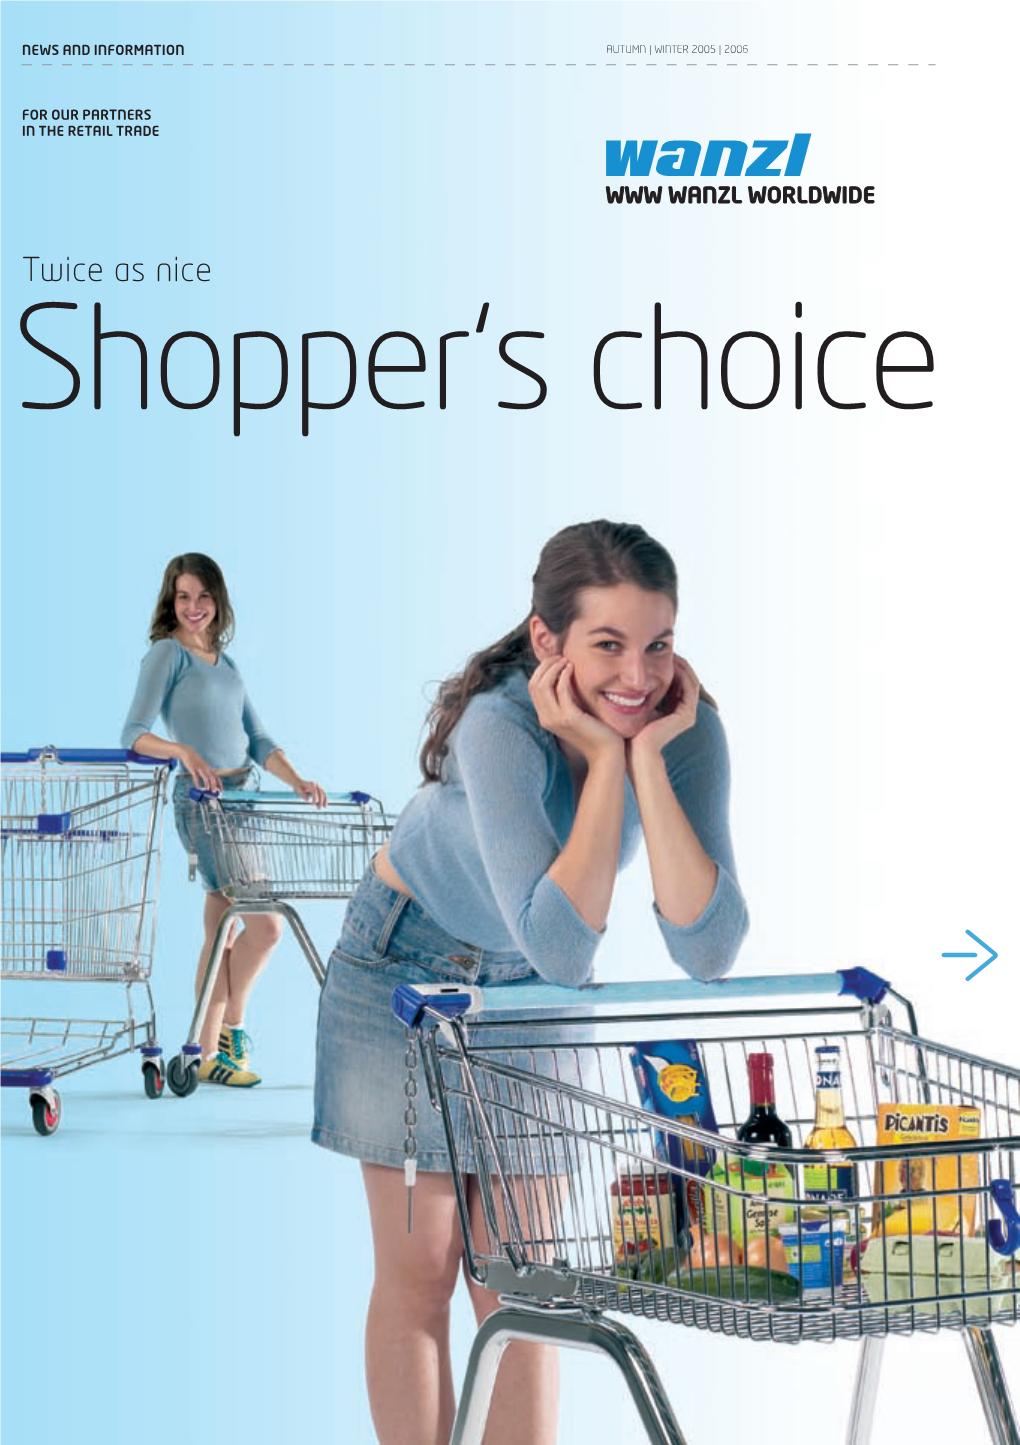 Twice As Nice Shopper‘S Choice 2 WANZL WORLDWIDE AUTUMN | WINTER 2005 | 2006 EDITORIAL